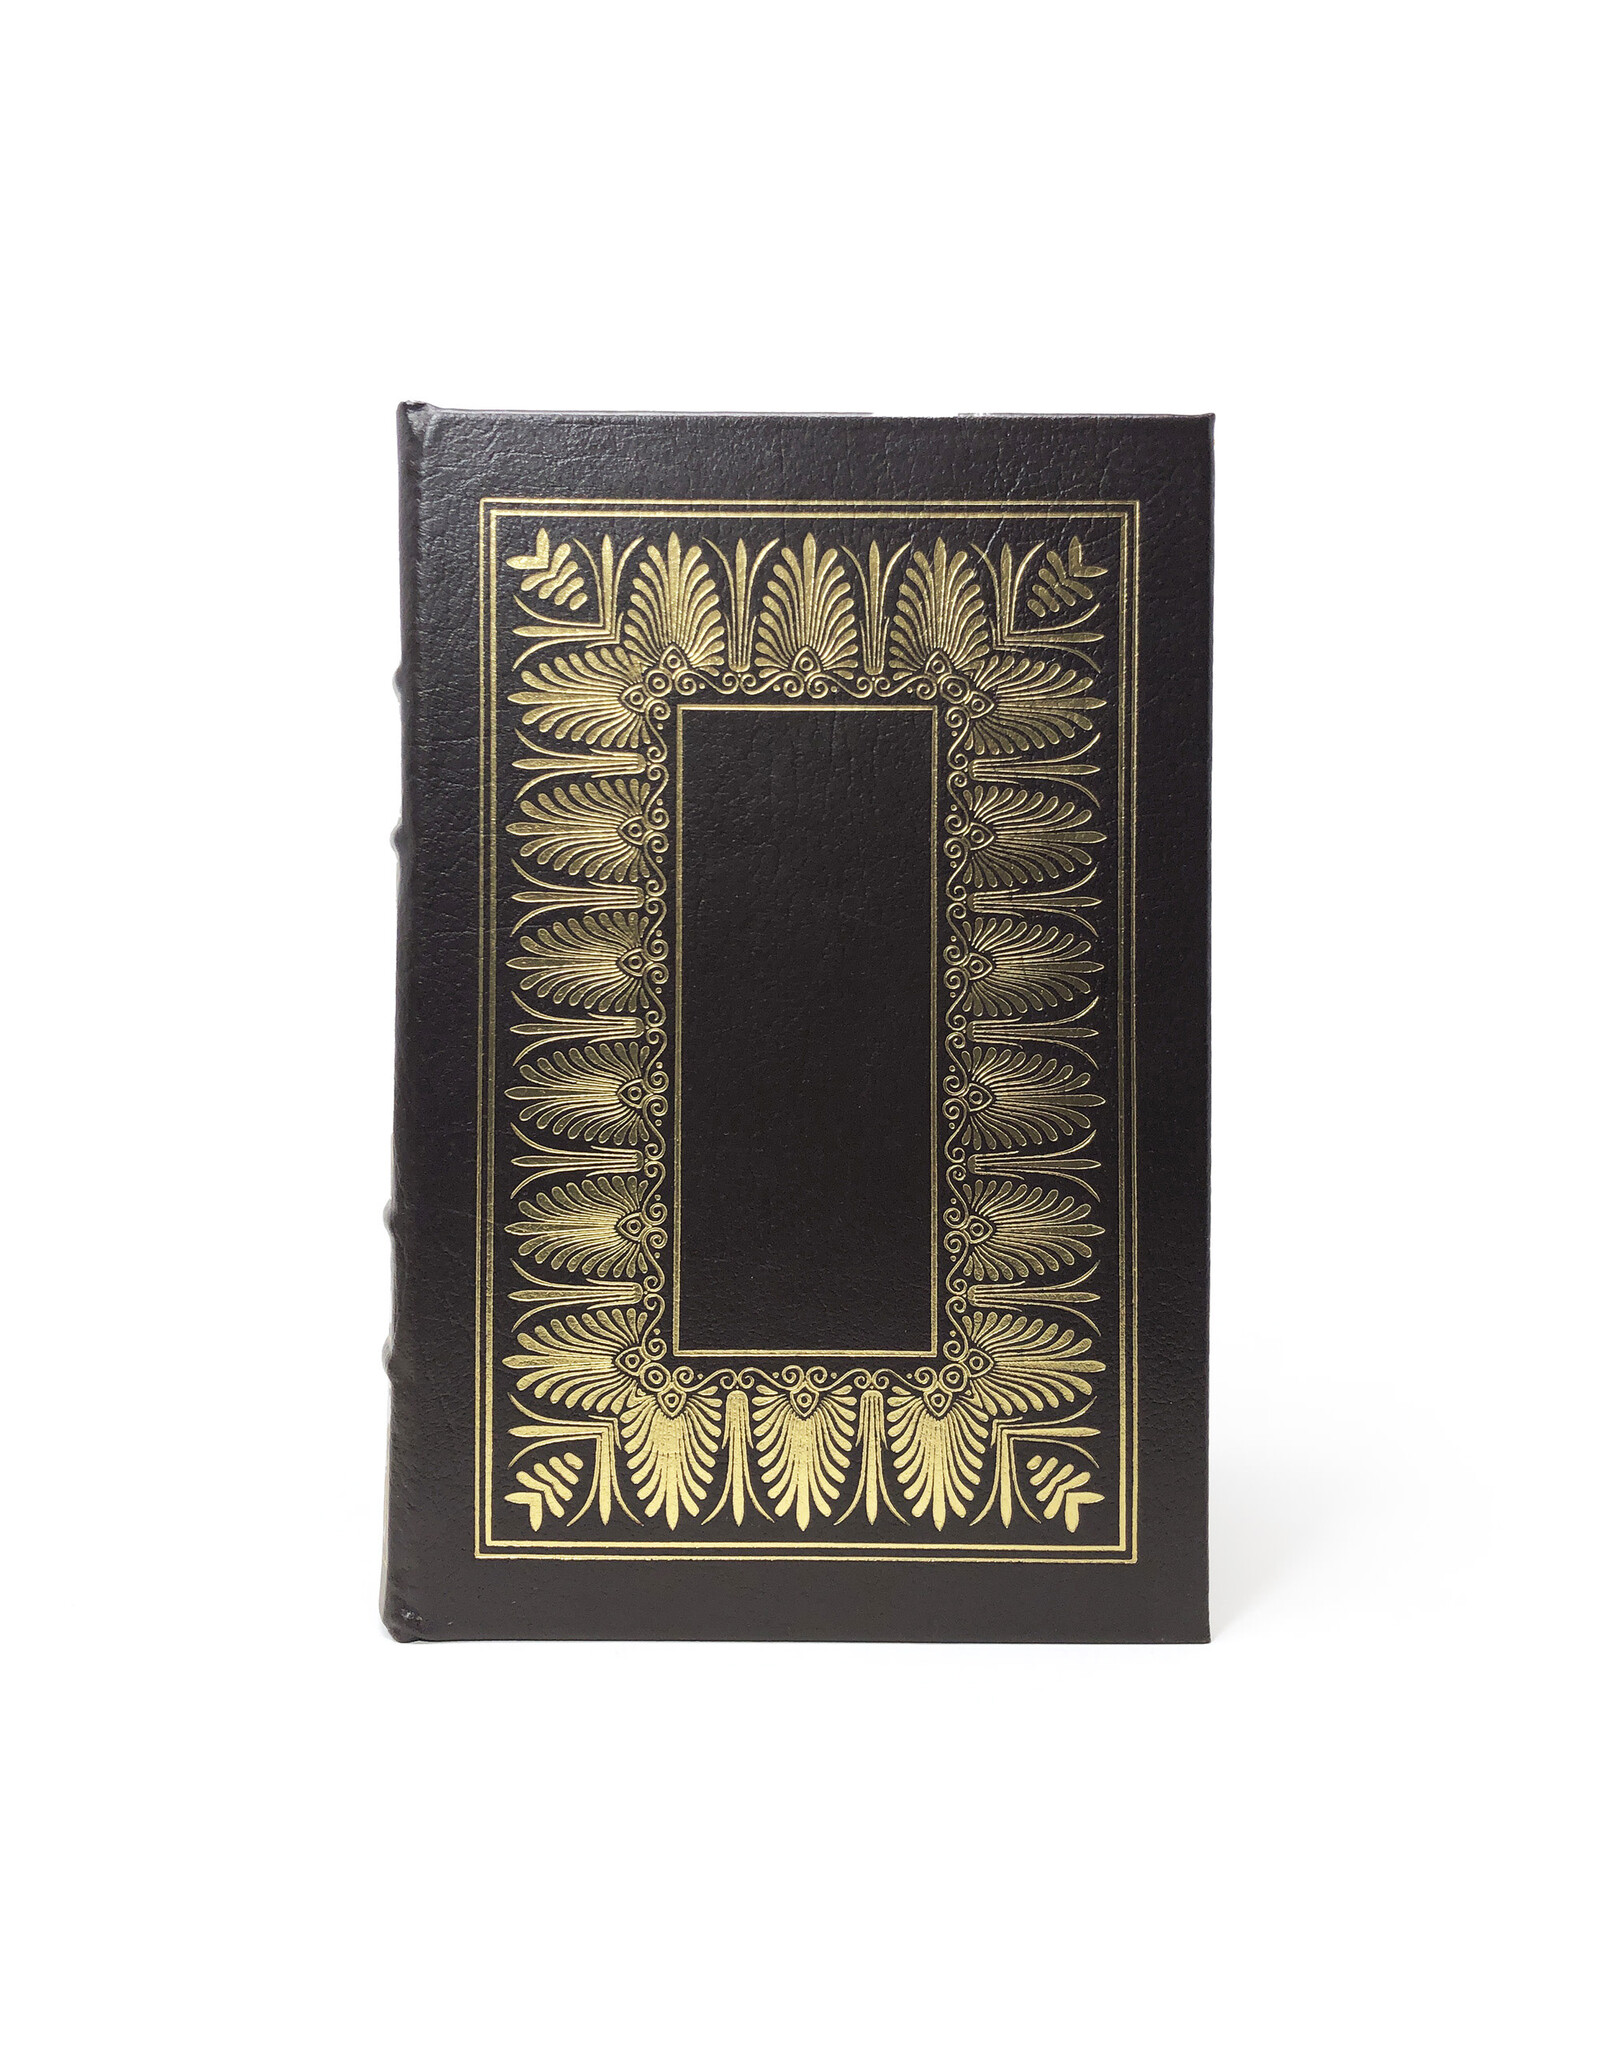 Easton Press Republic 100 Greatest Books Ever Written Genuine Leather Collector's Edition